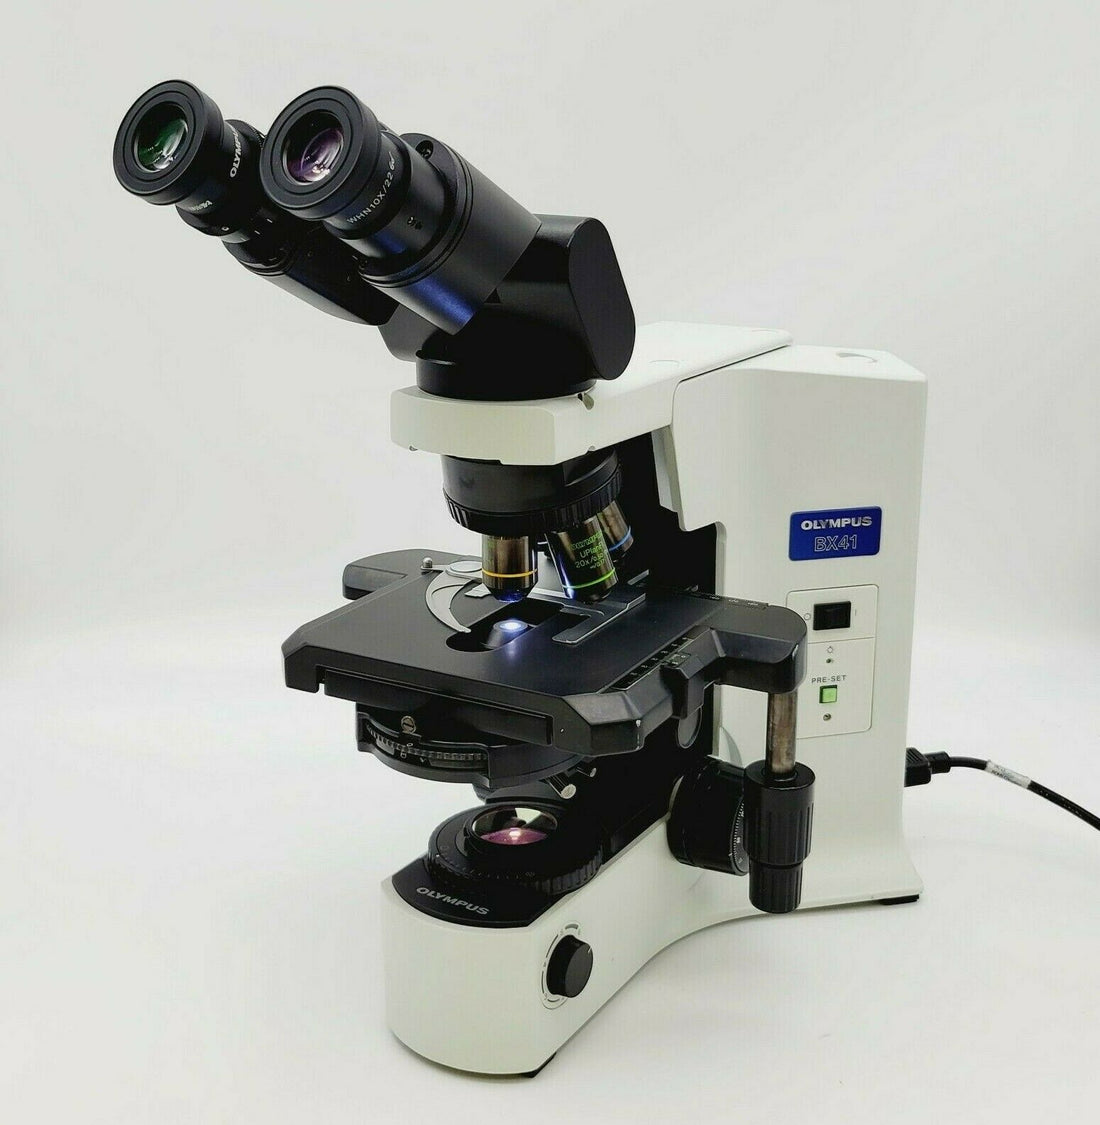 Why Buy a Used / Refurbished Microscope